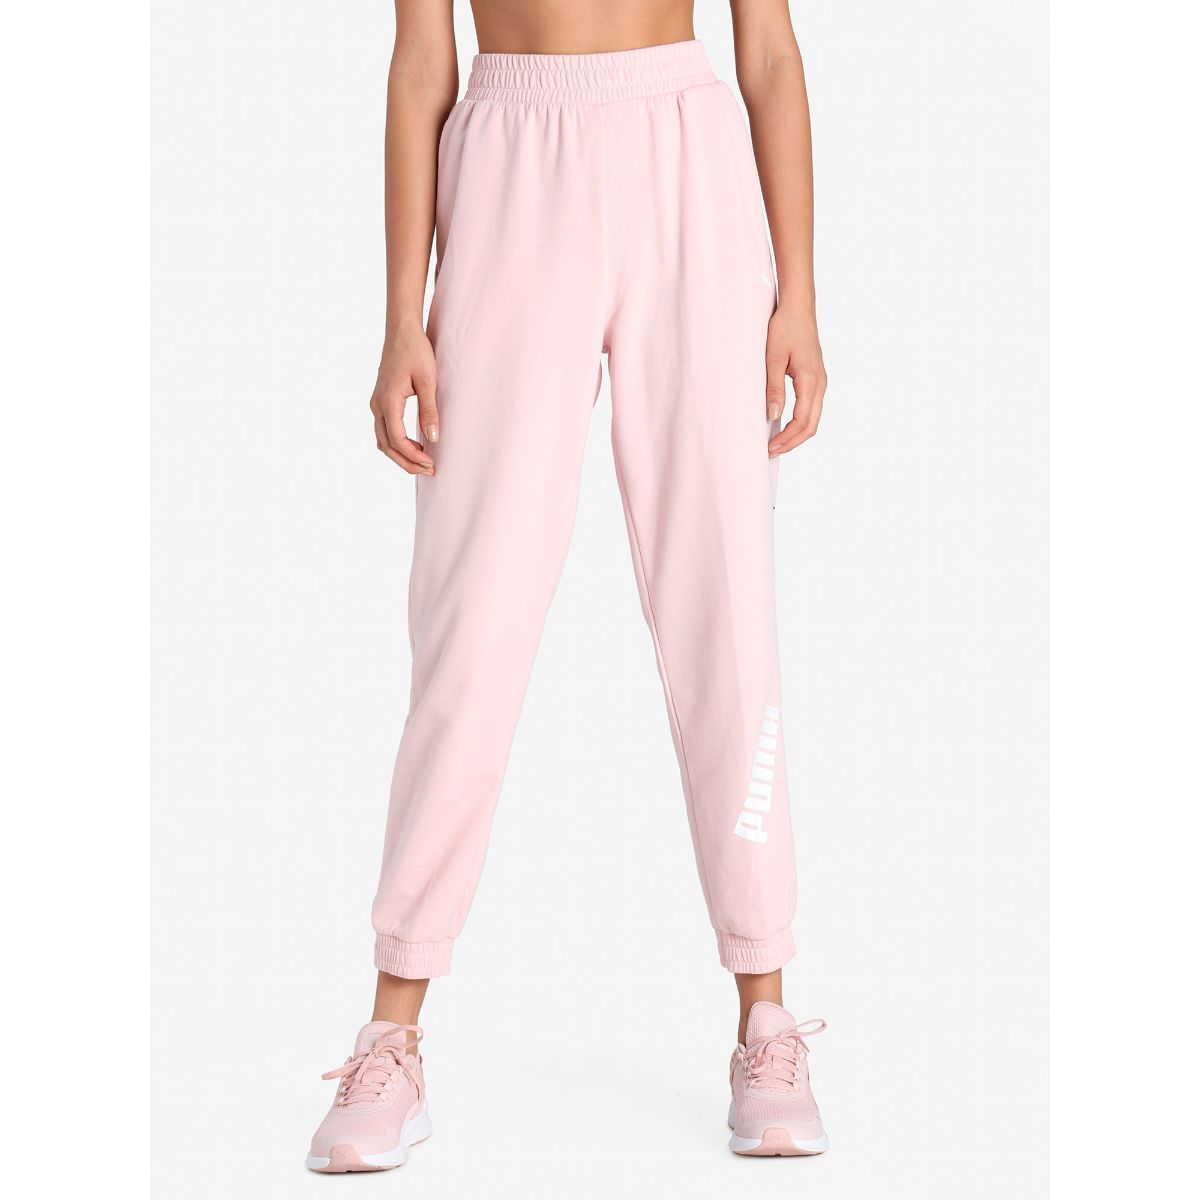 Buy Pink Track Pants for Women by Teamspirit Online  Ajiocom